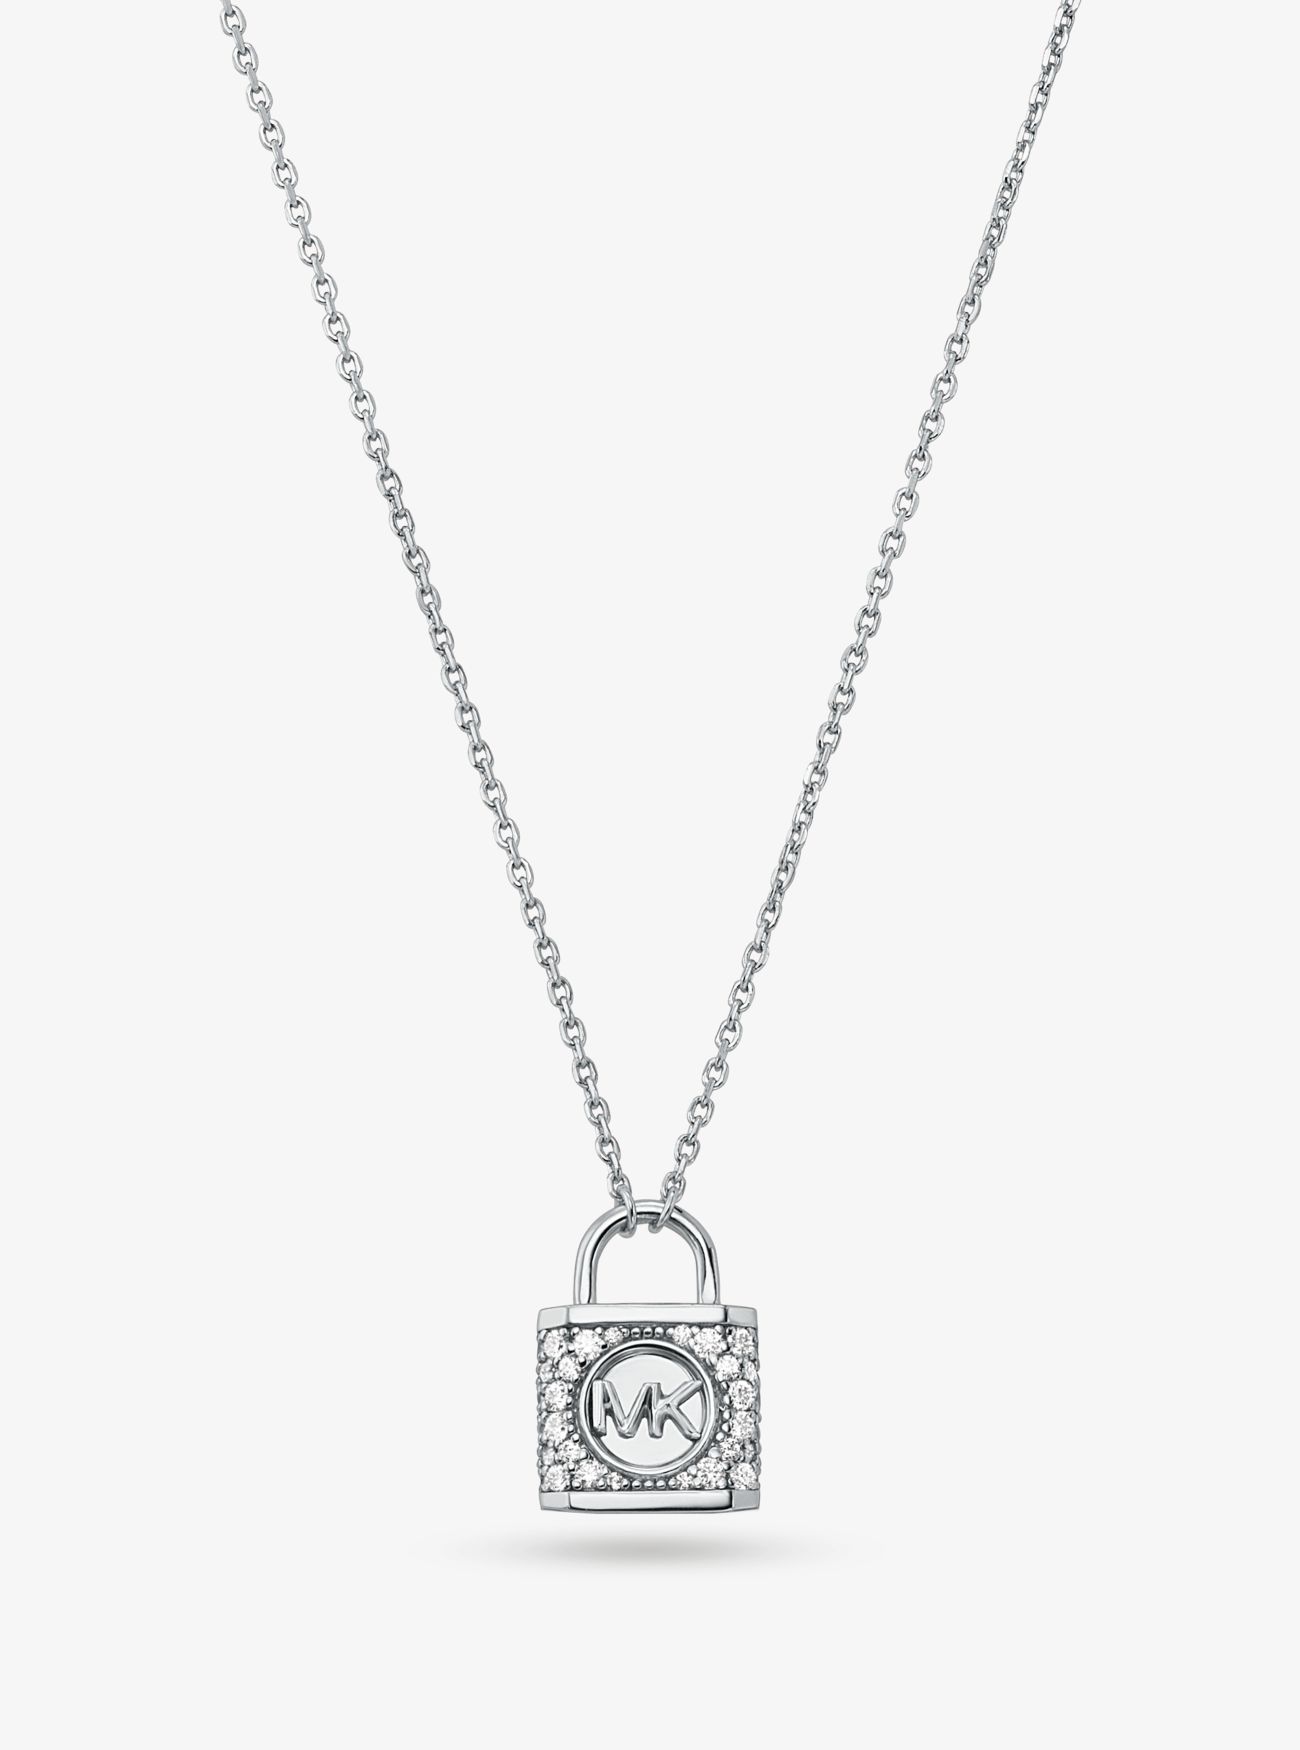 MK Precious Metal-Plated Sterling Silver Pavé Lock Necklace - Grey - Michael Kors